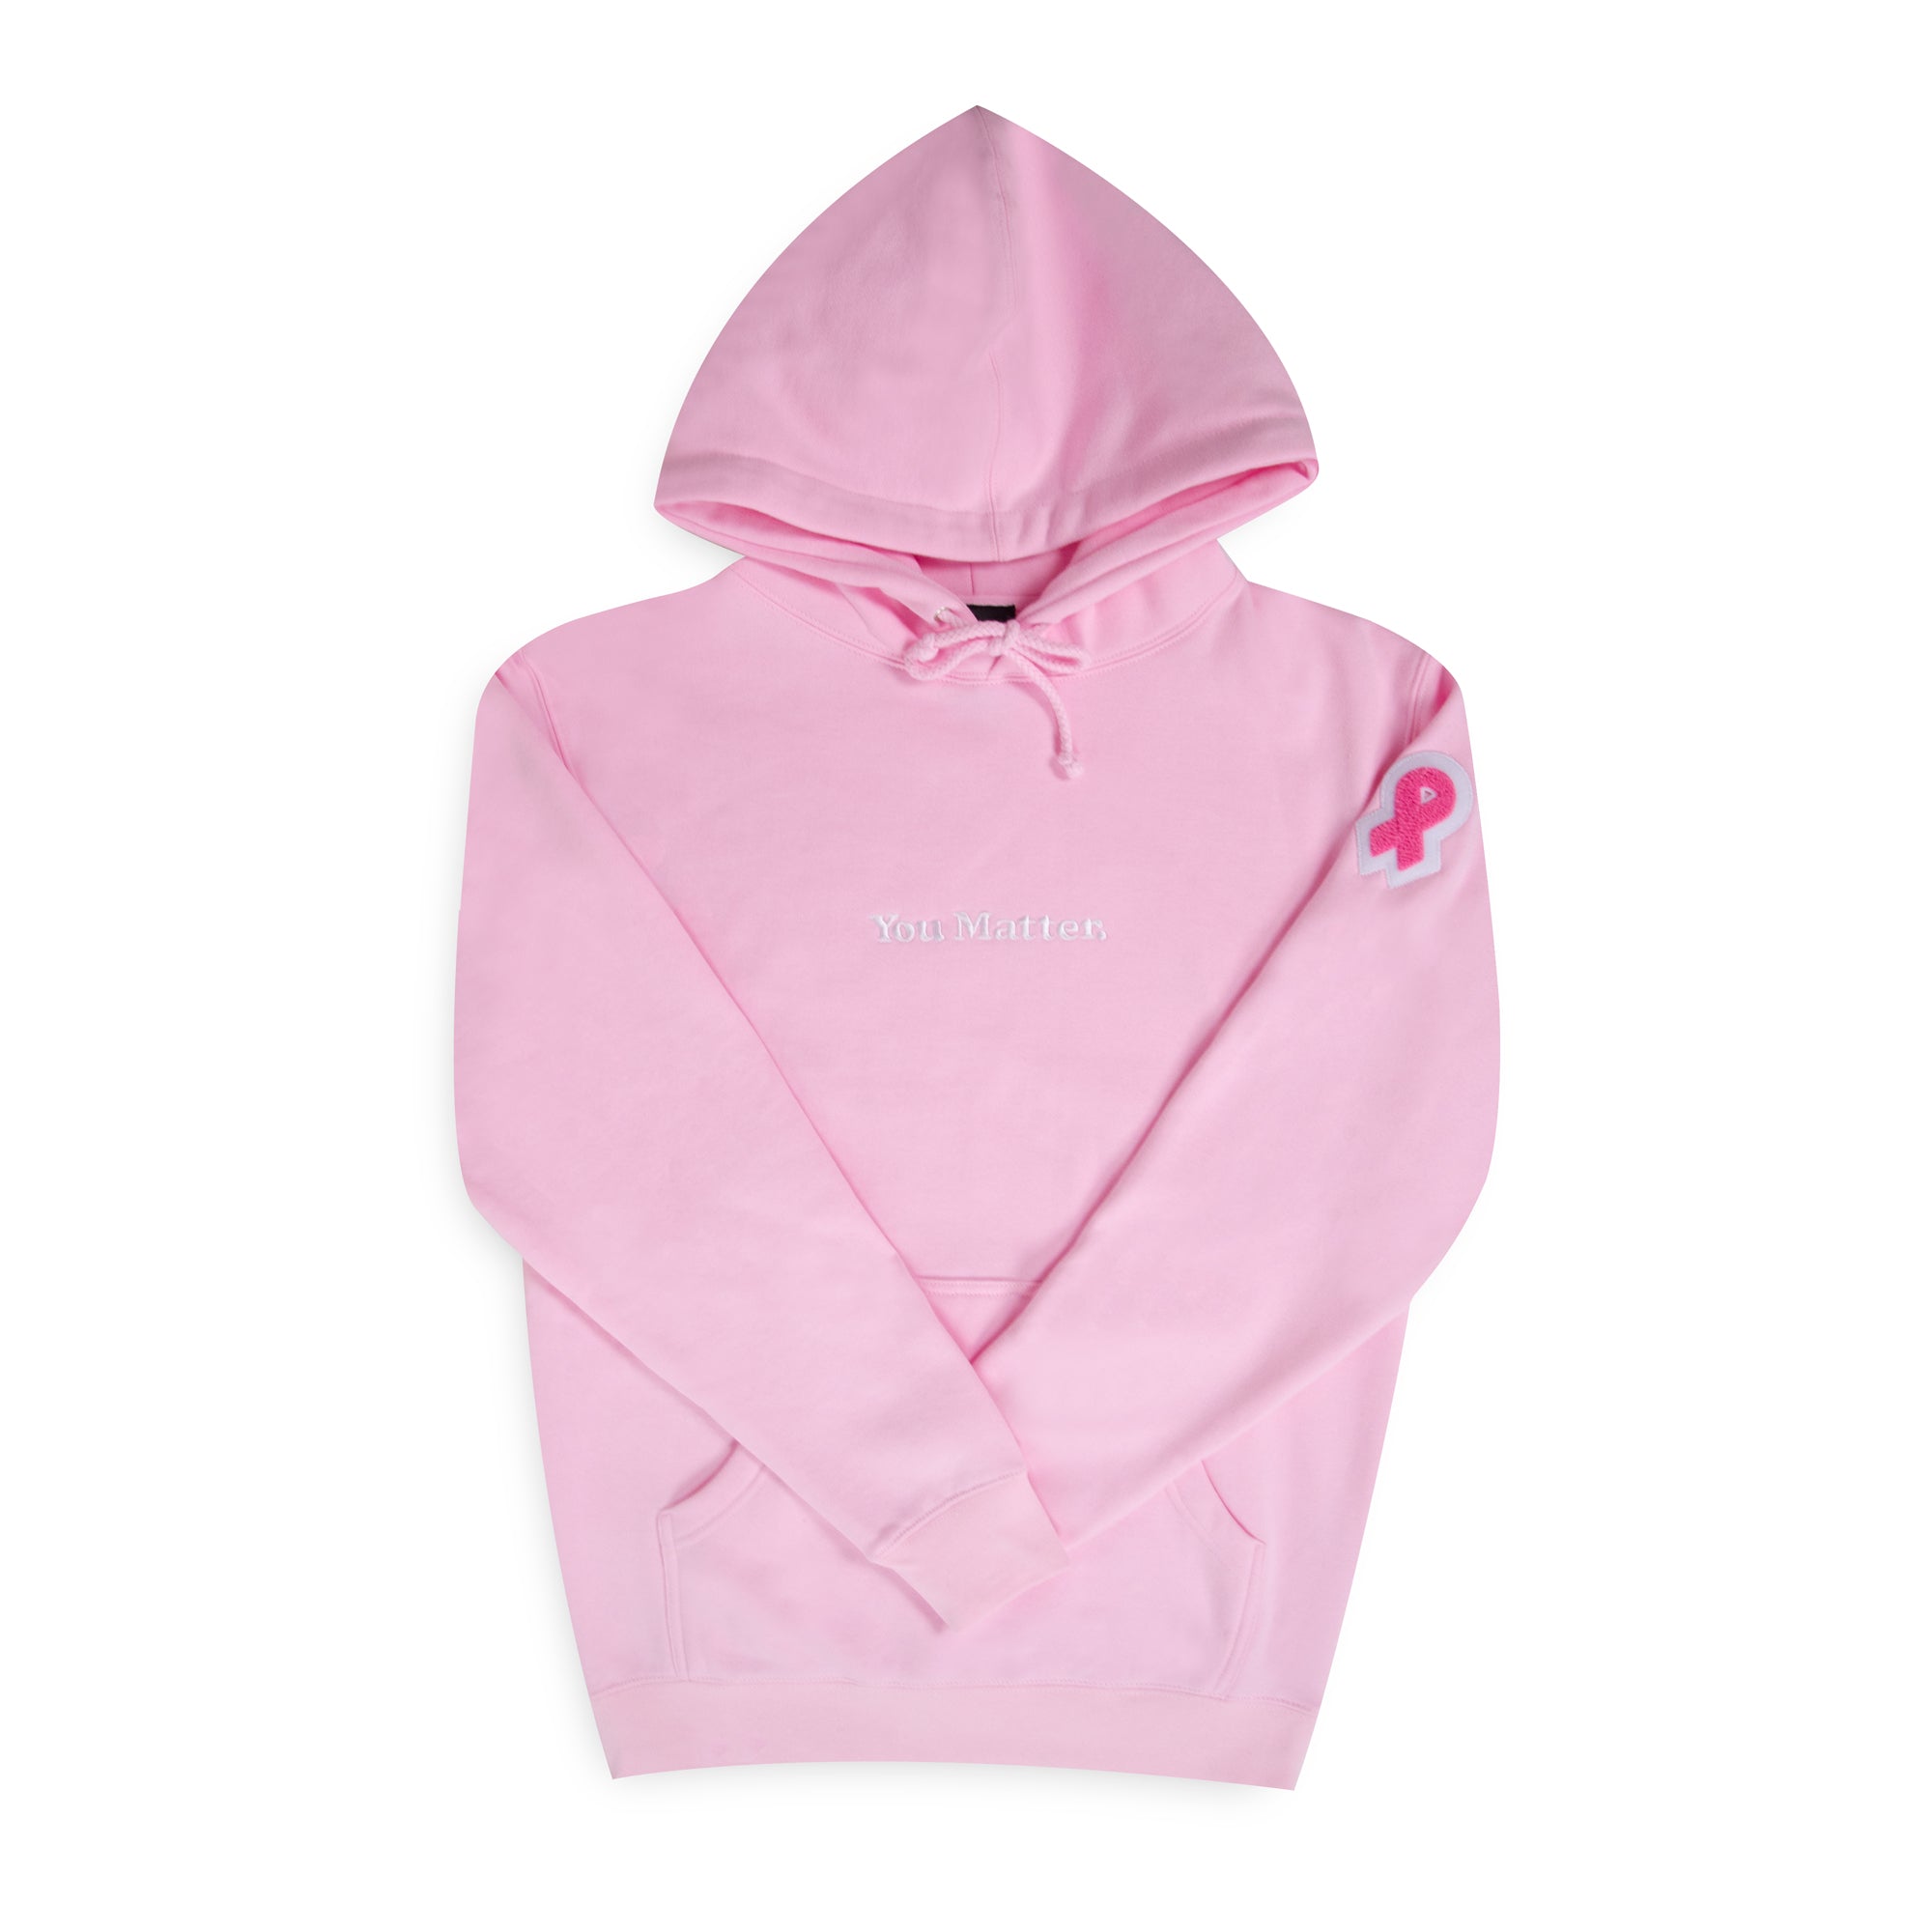 you matter pink hoodie